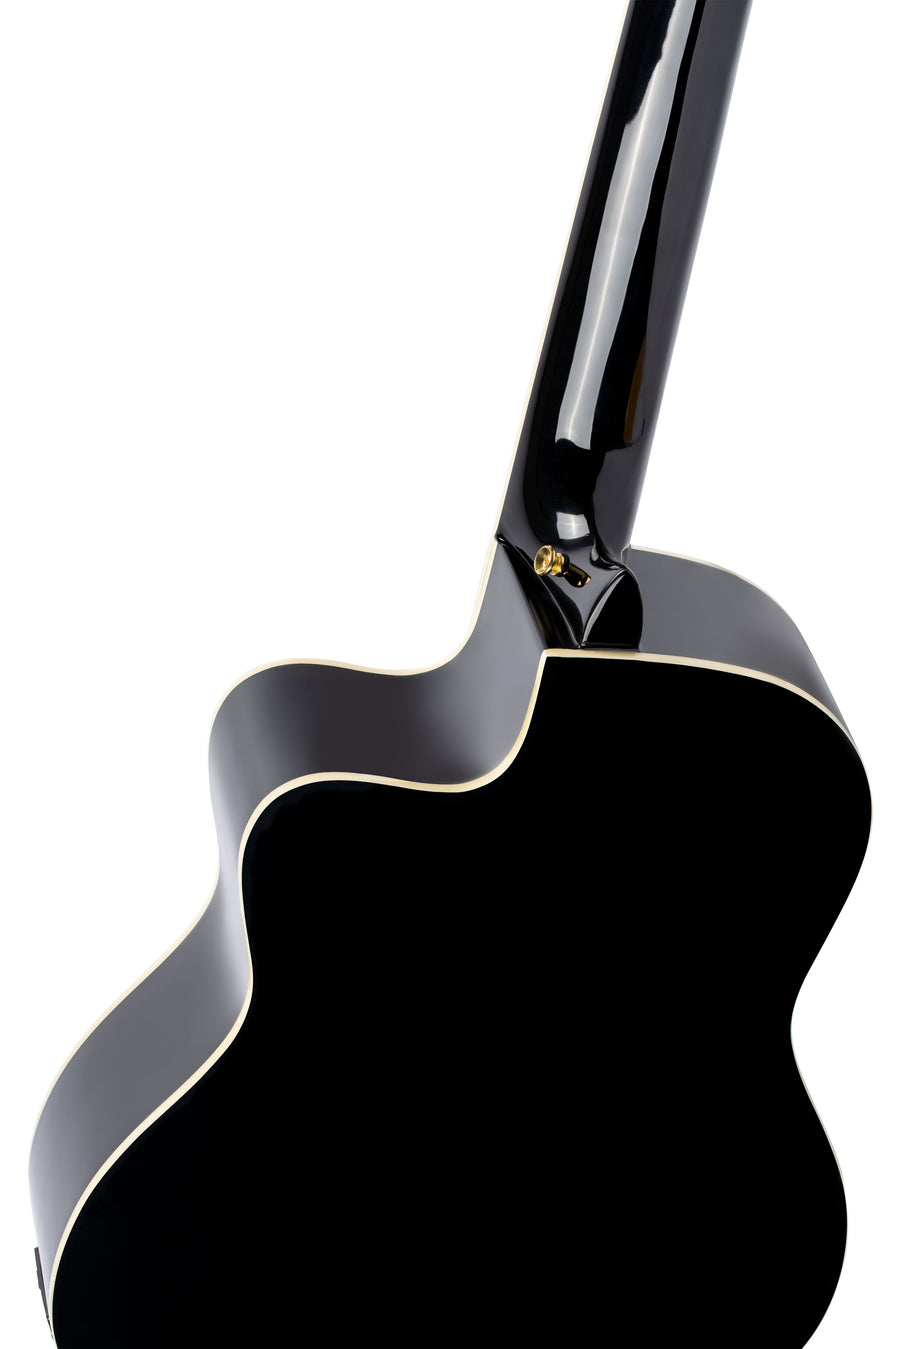 Ortega RCE141BK Classical Guitar - [ka(:)rısma] showroom & concept store